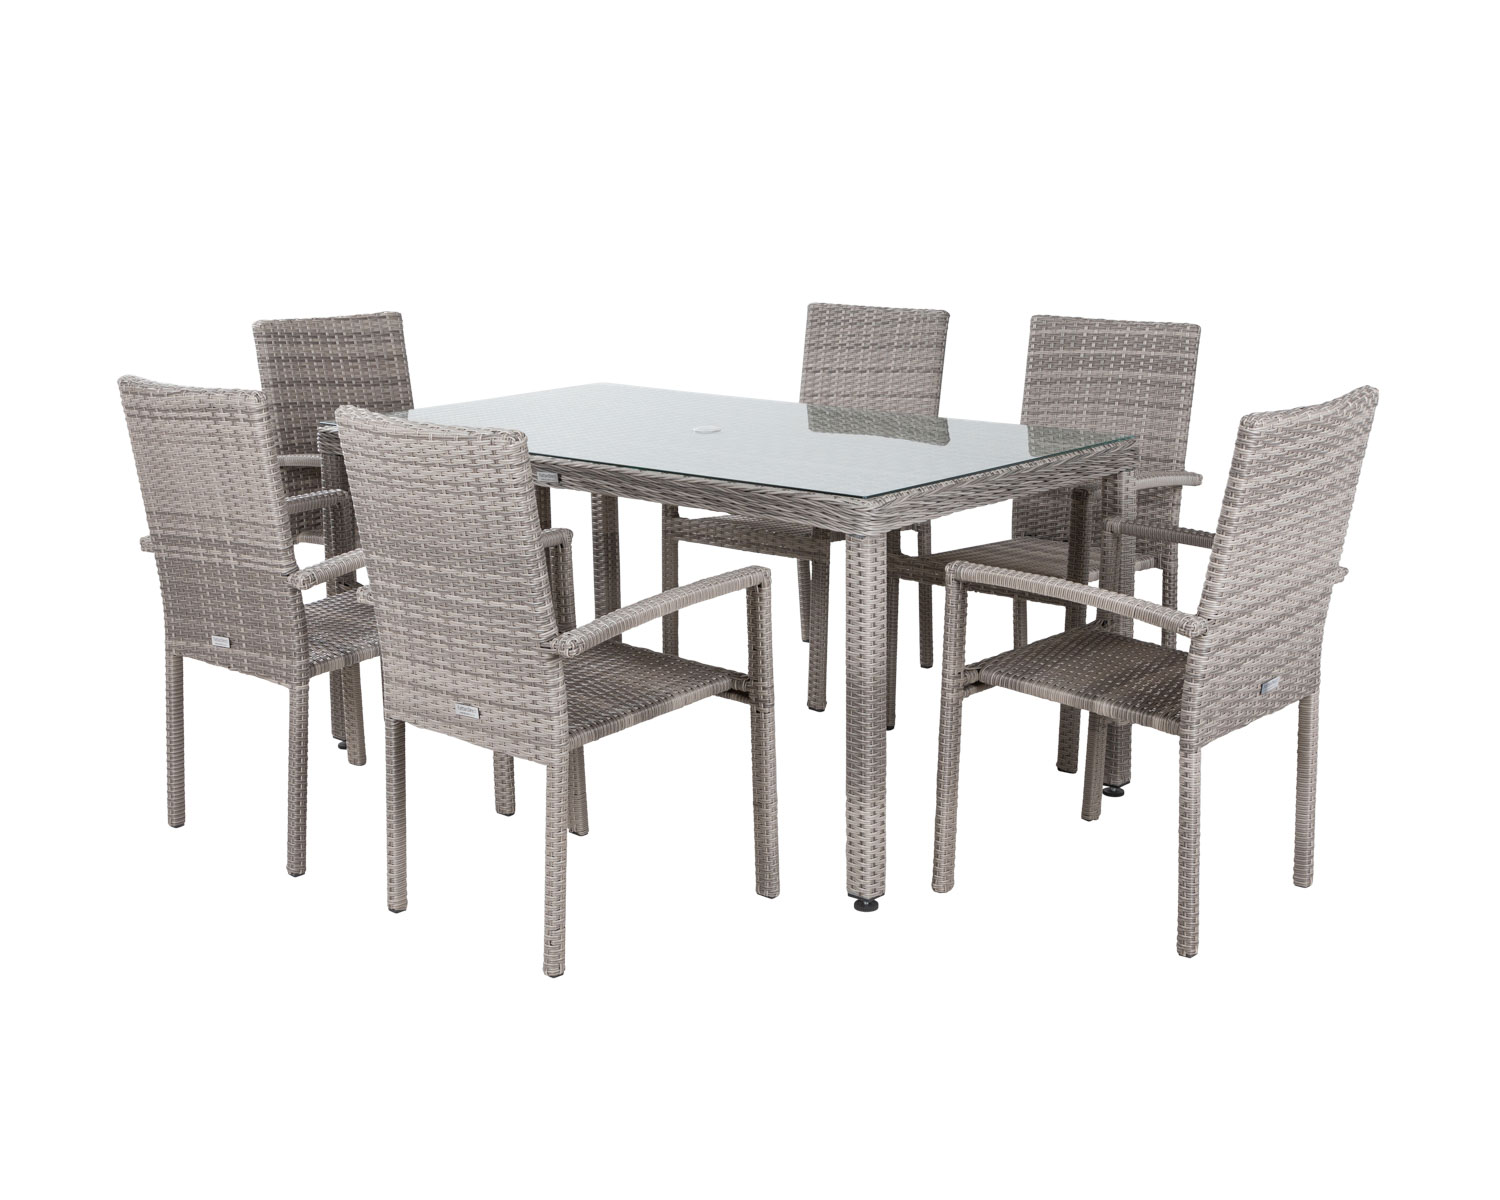 6 Seat Rattan Garden Dining Set With Rectangular Open Leg Table In Grey Rio Rattan Direct